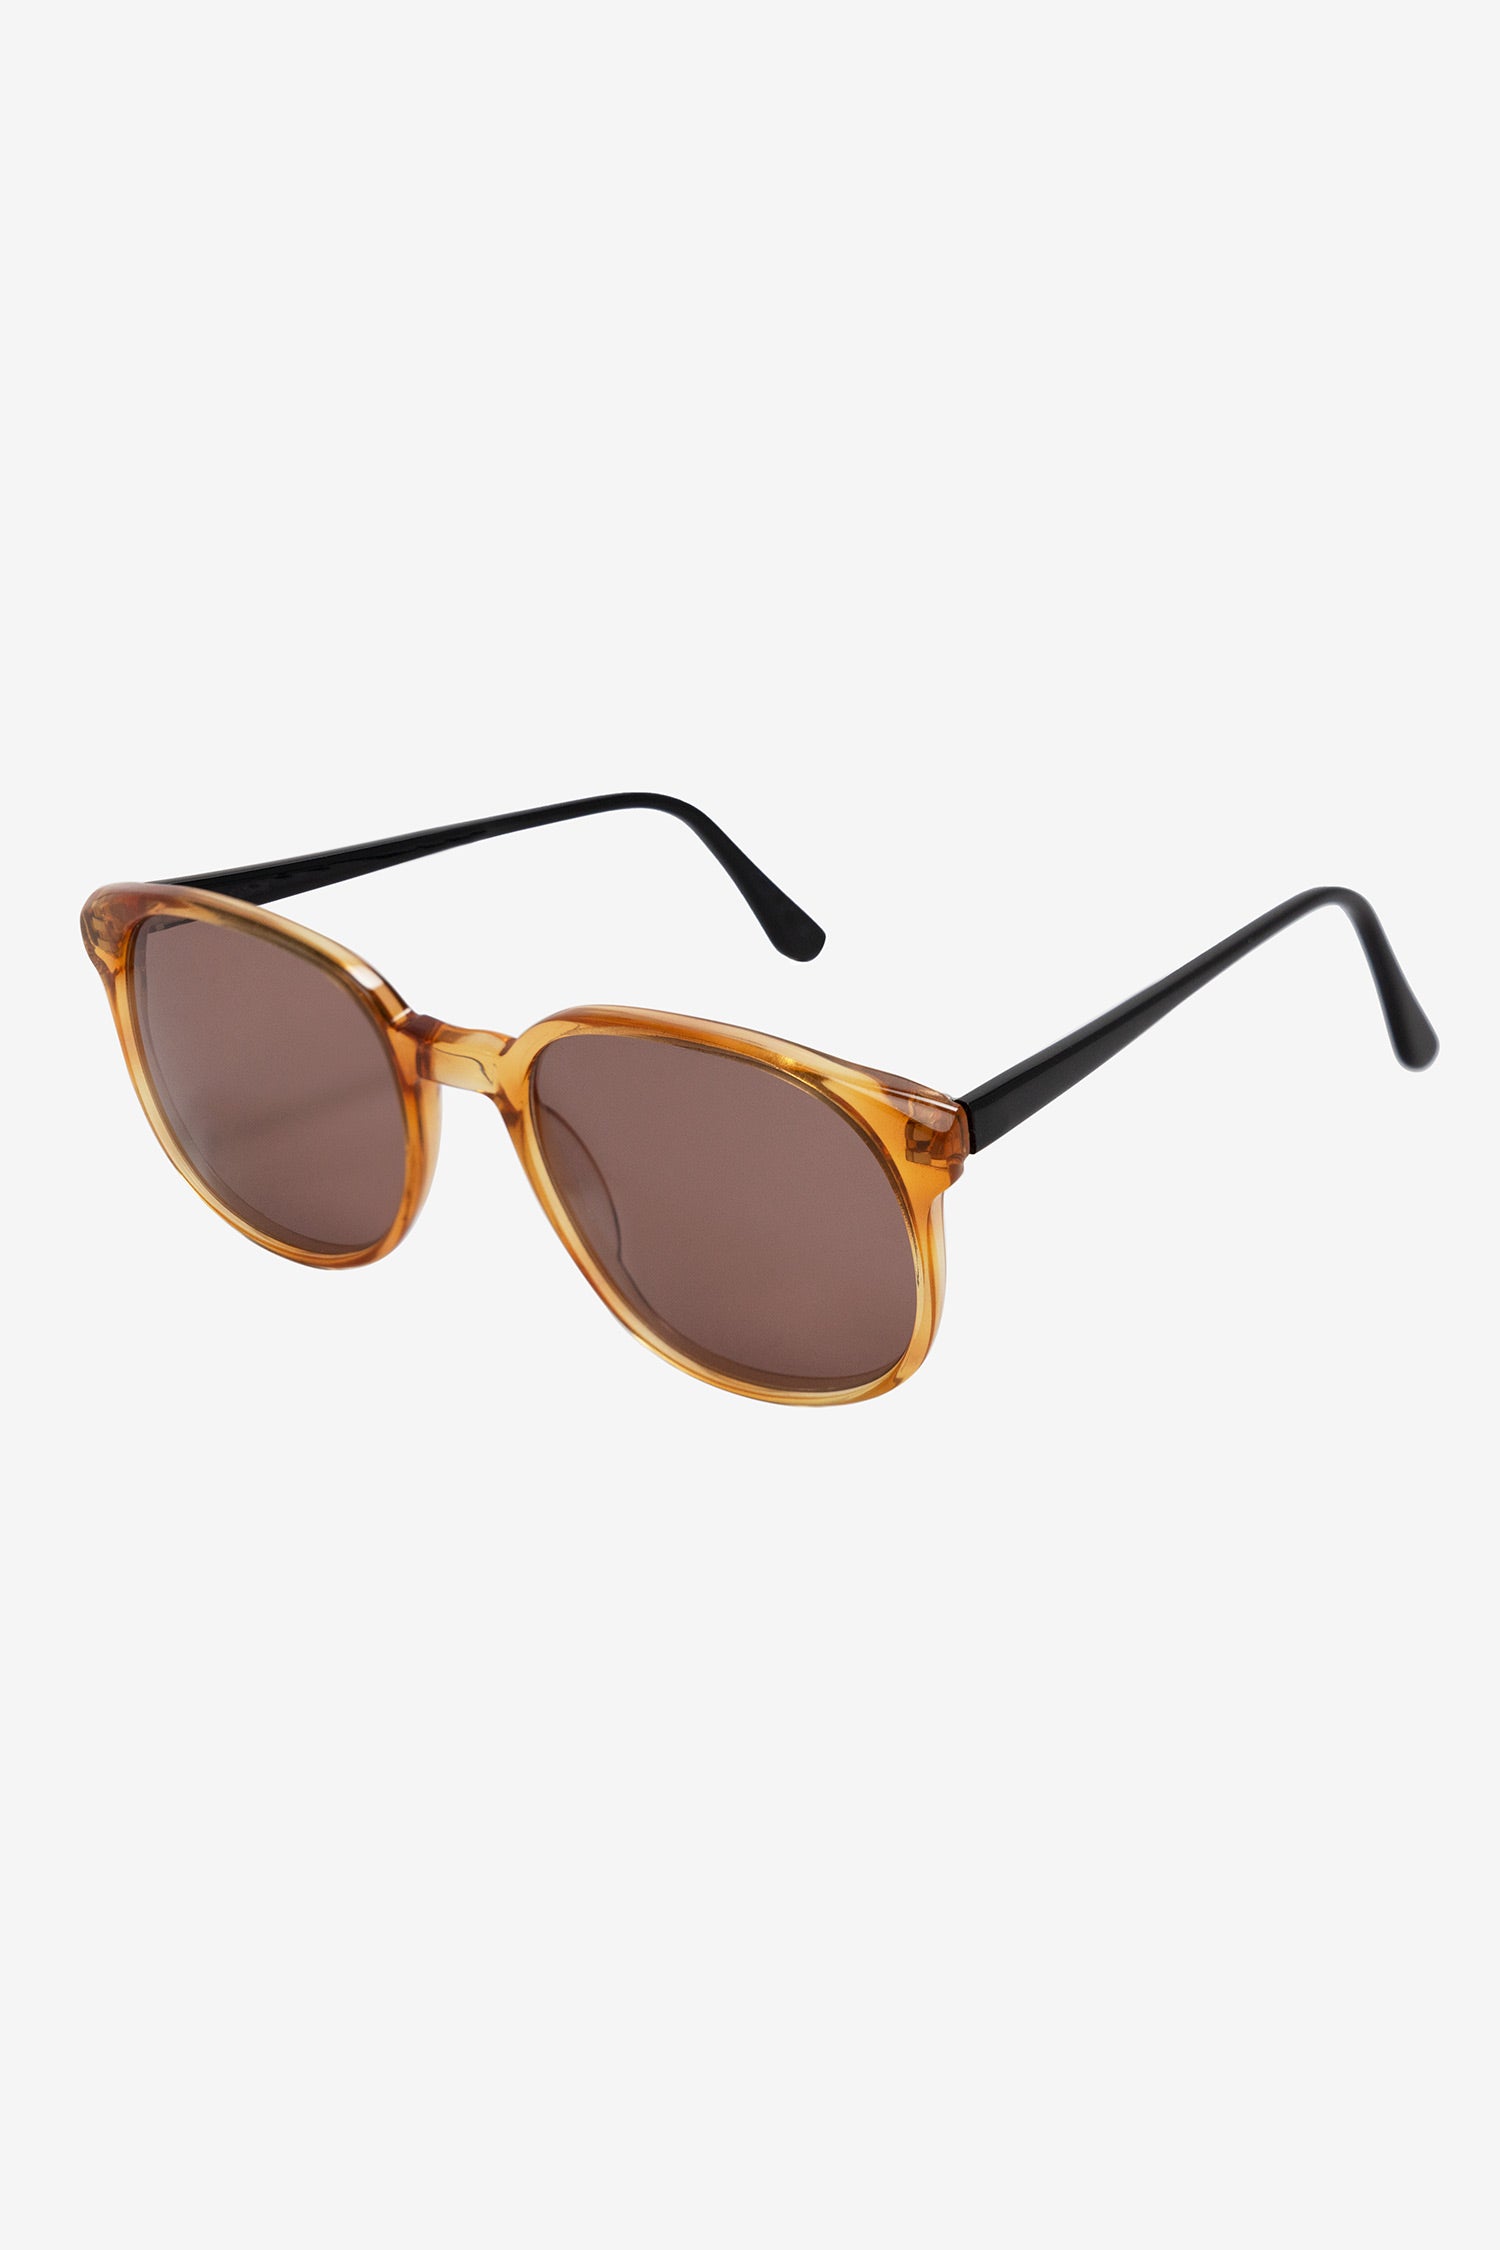 SGVN33 - Halifax Sunglasses – Los Angeles Apparel